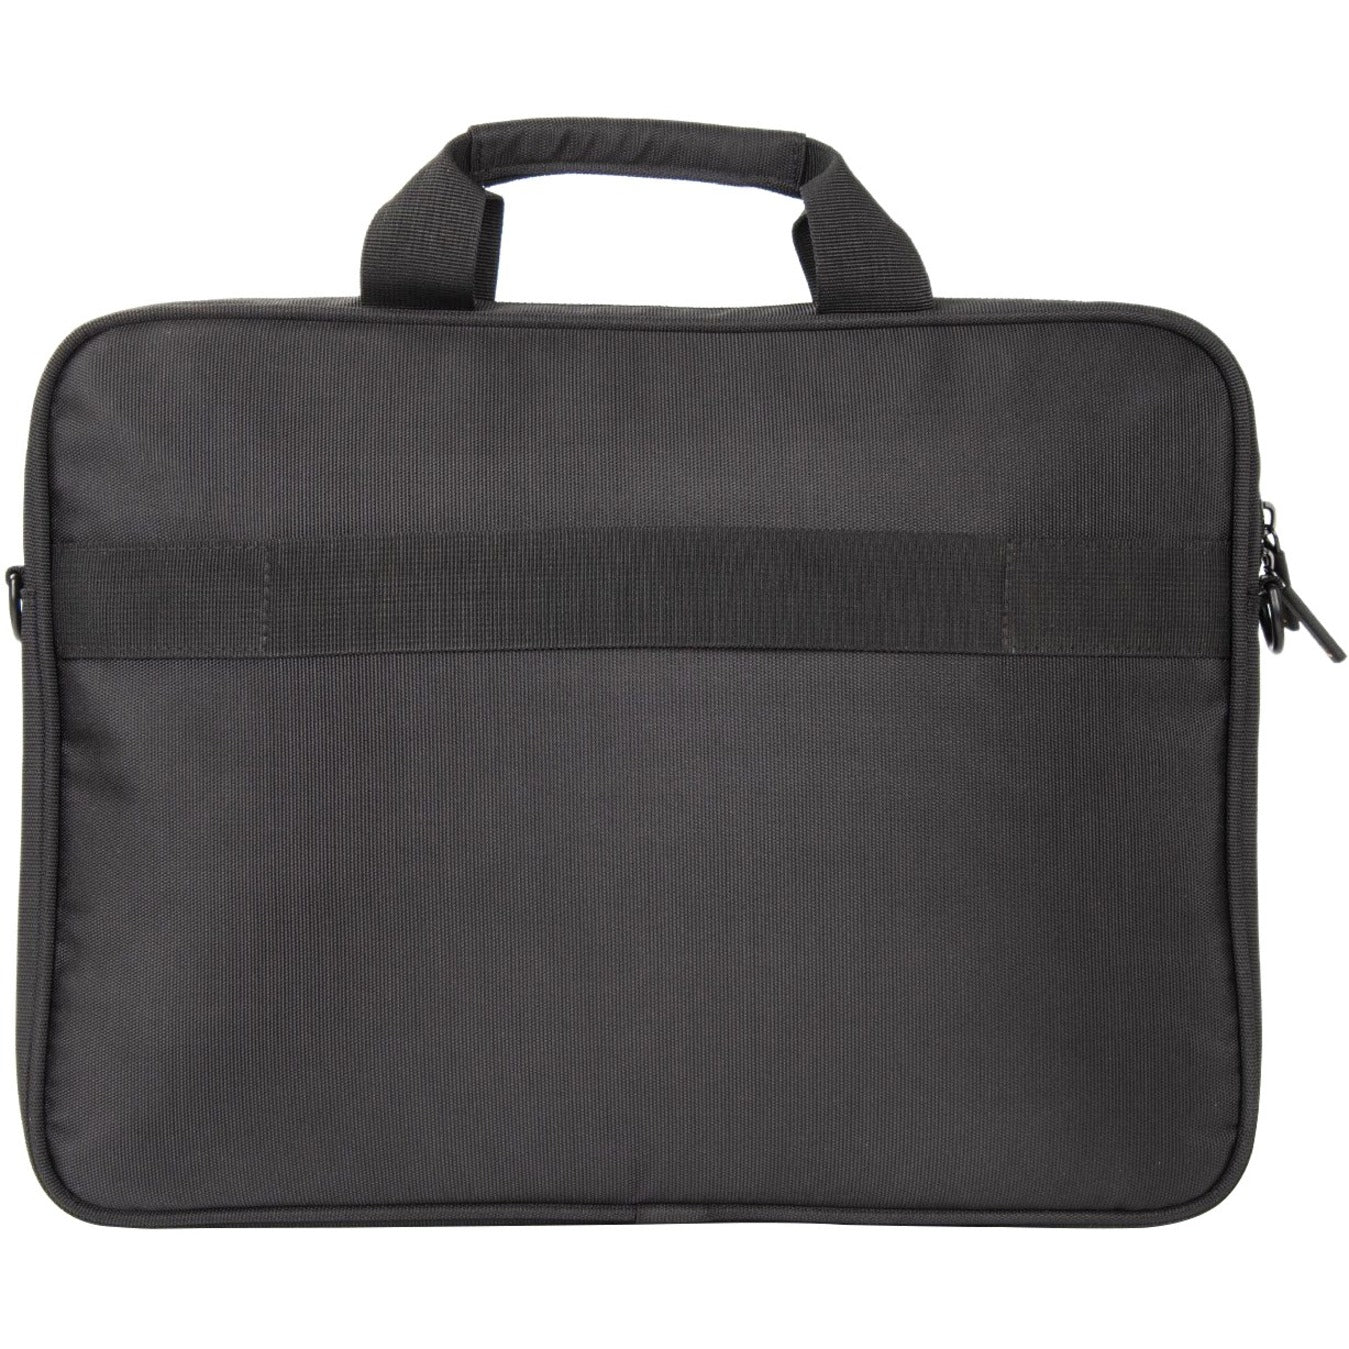 Rocstor Y1CC002-B1 Premium Universal Laptop Carrying Case Toploading, Fits up to 16" Laptop, RFID Pocket